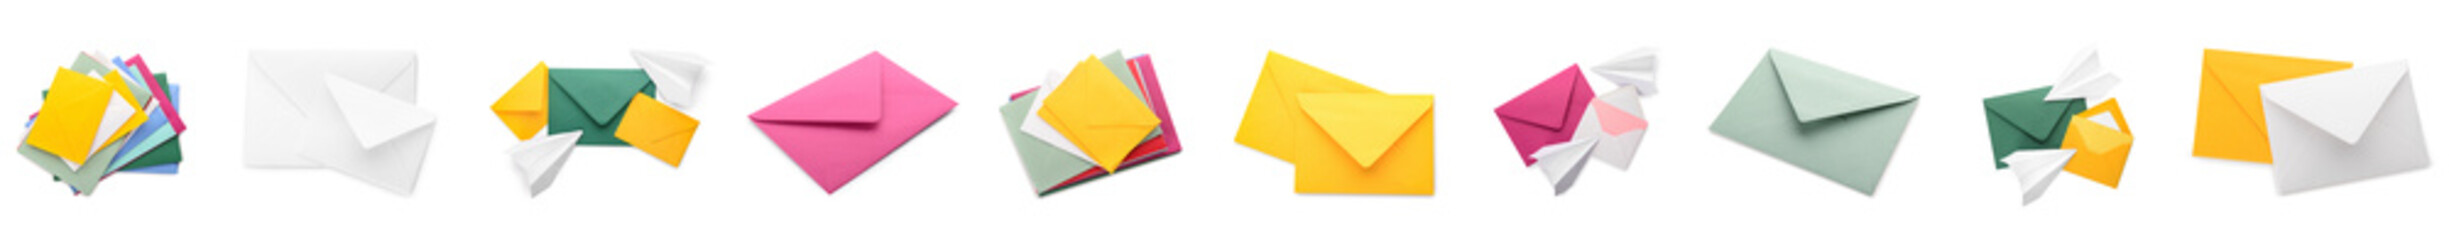 Set of envelopes on white background